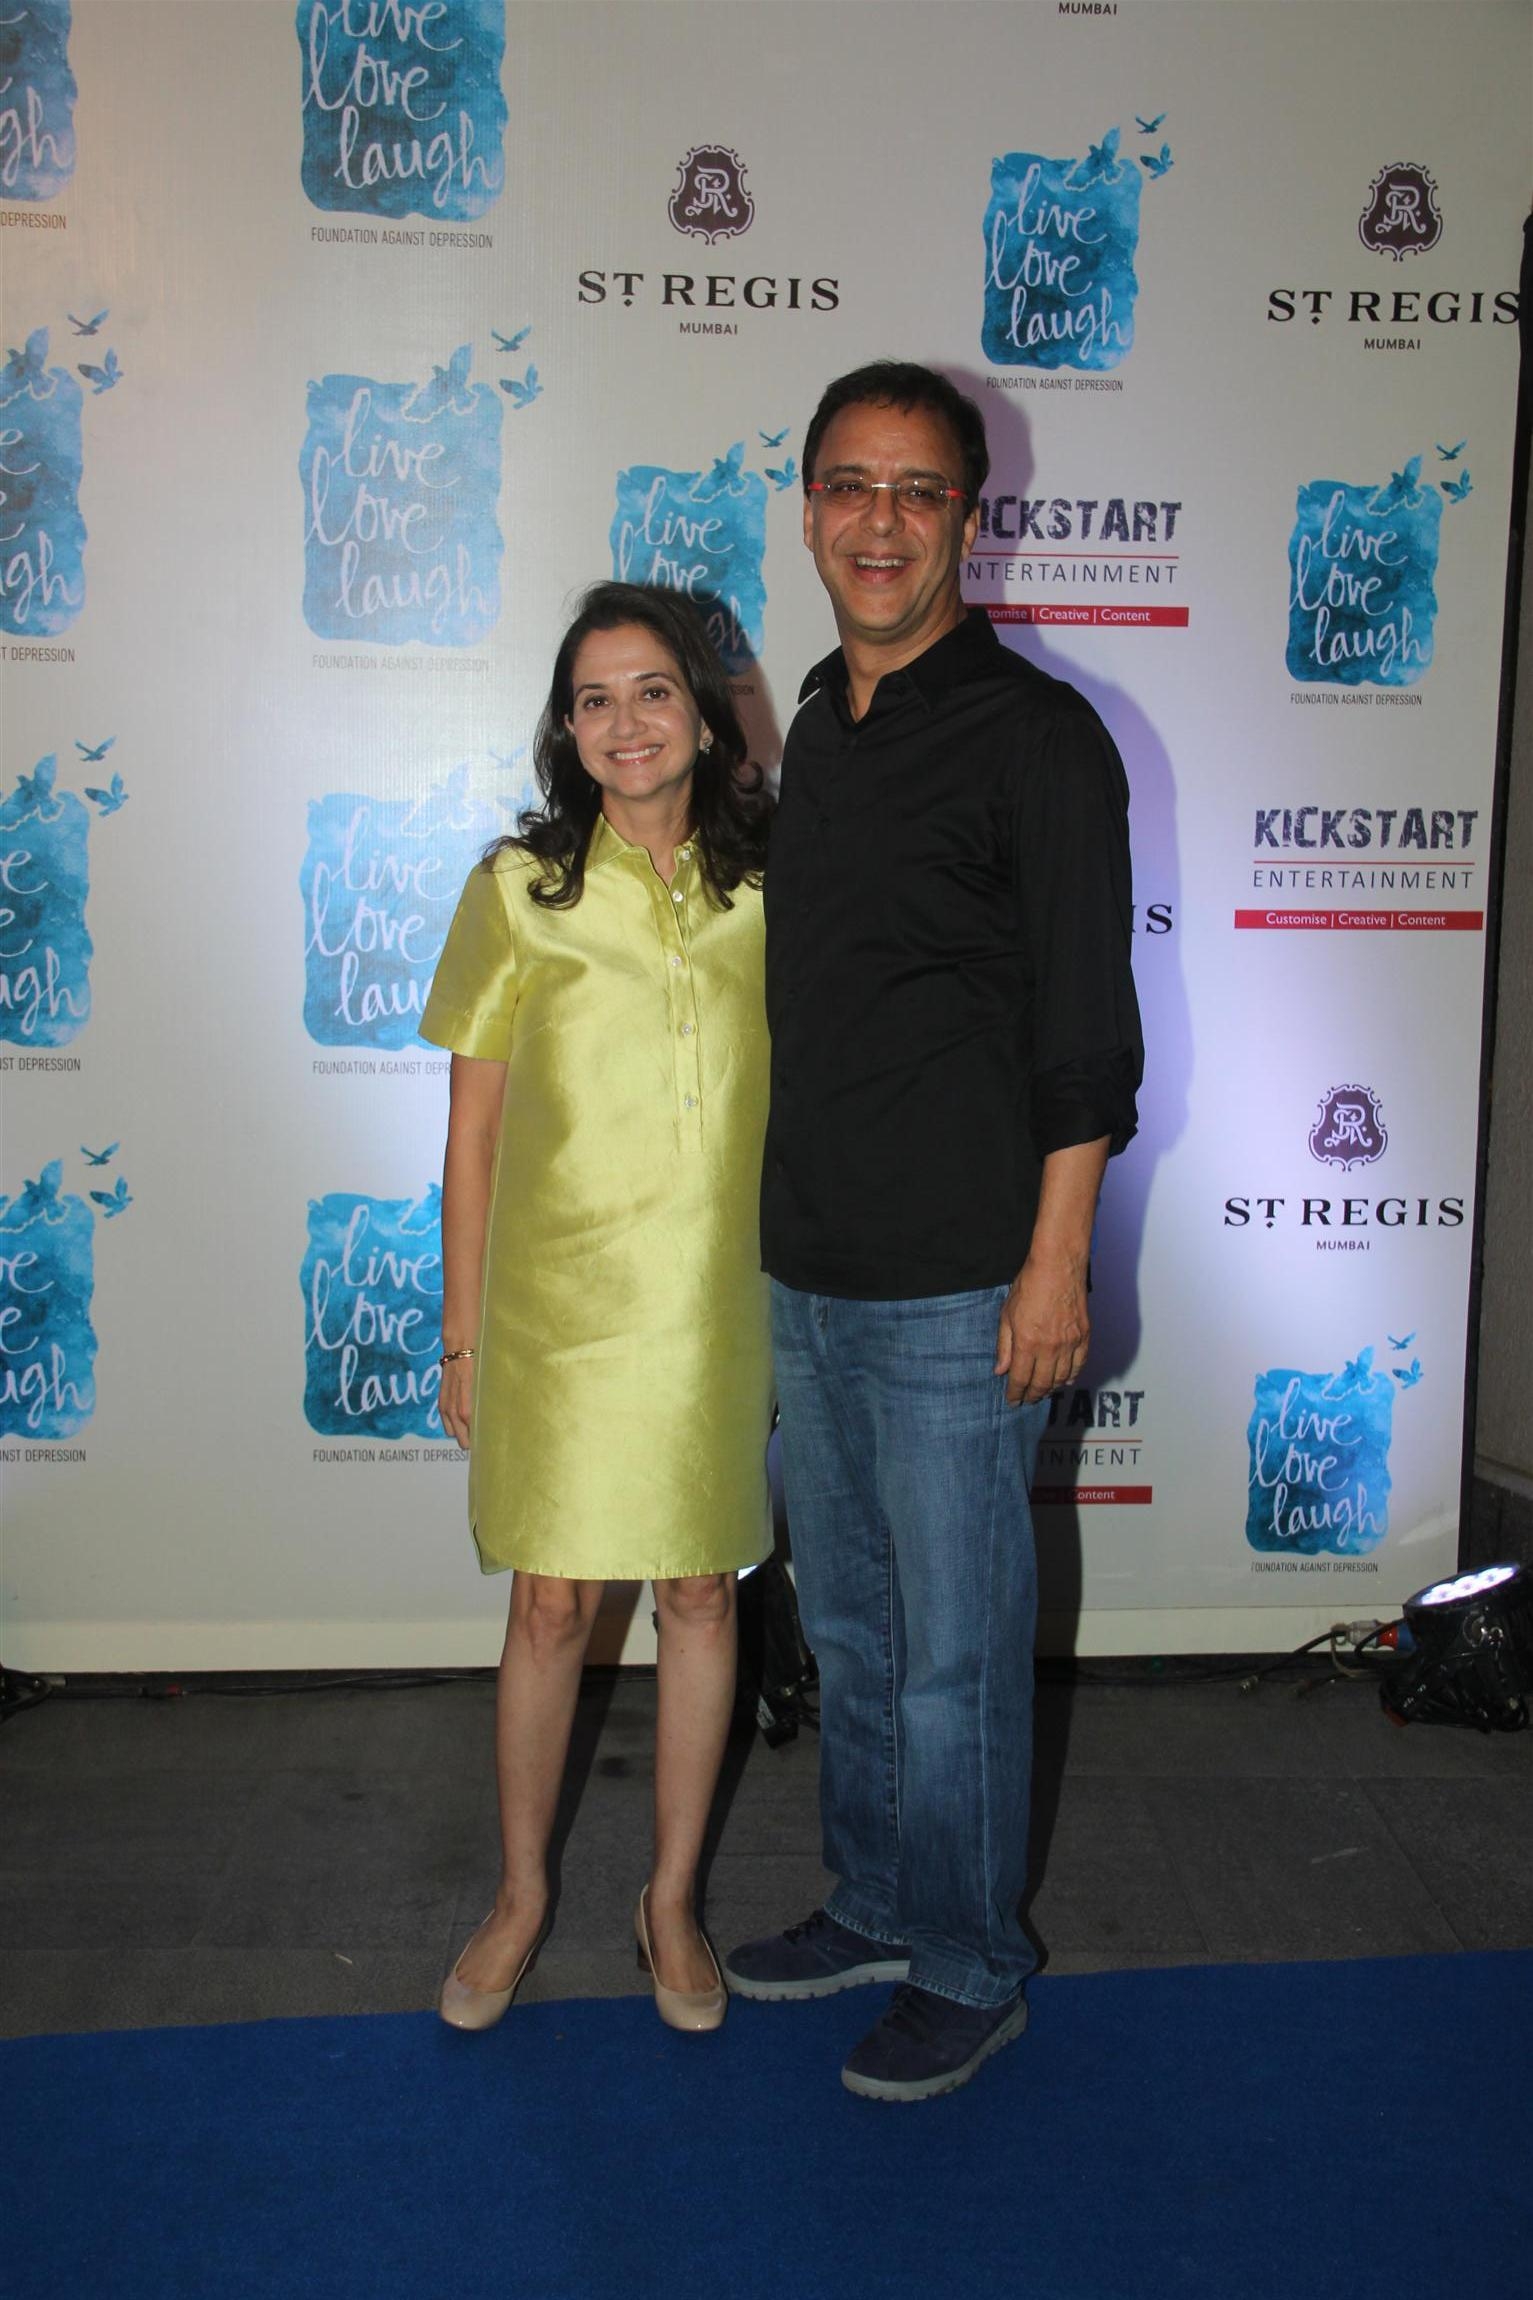 Vidhu Vinod Chopra along with his wife Anupama Chopra during the launch of Deepika Padukone's NGO The Live Love Laugh Foundation in Mumbai